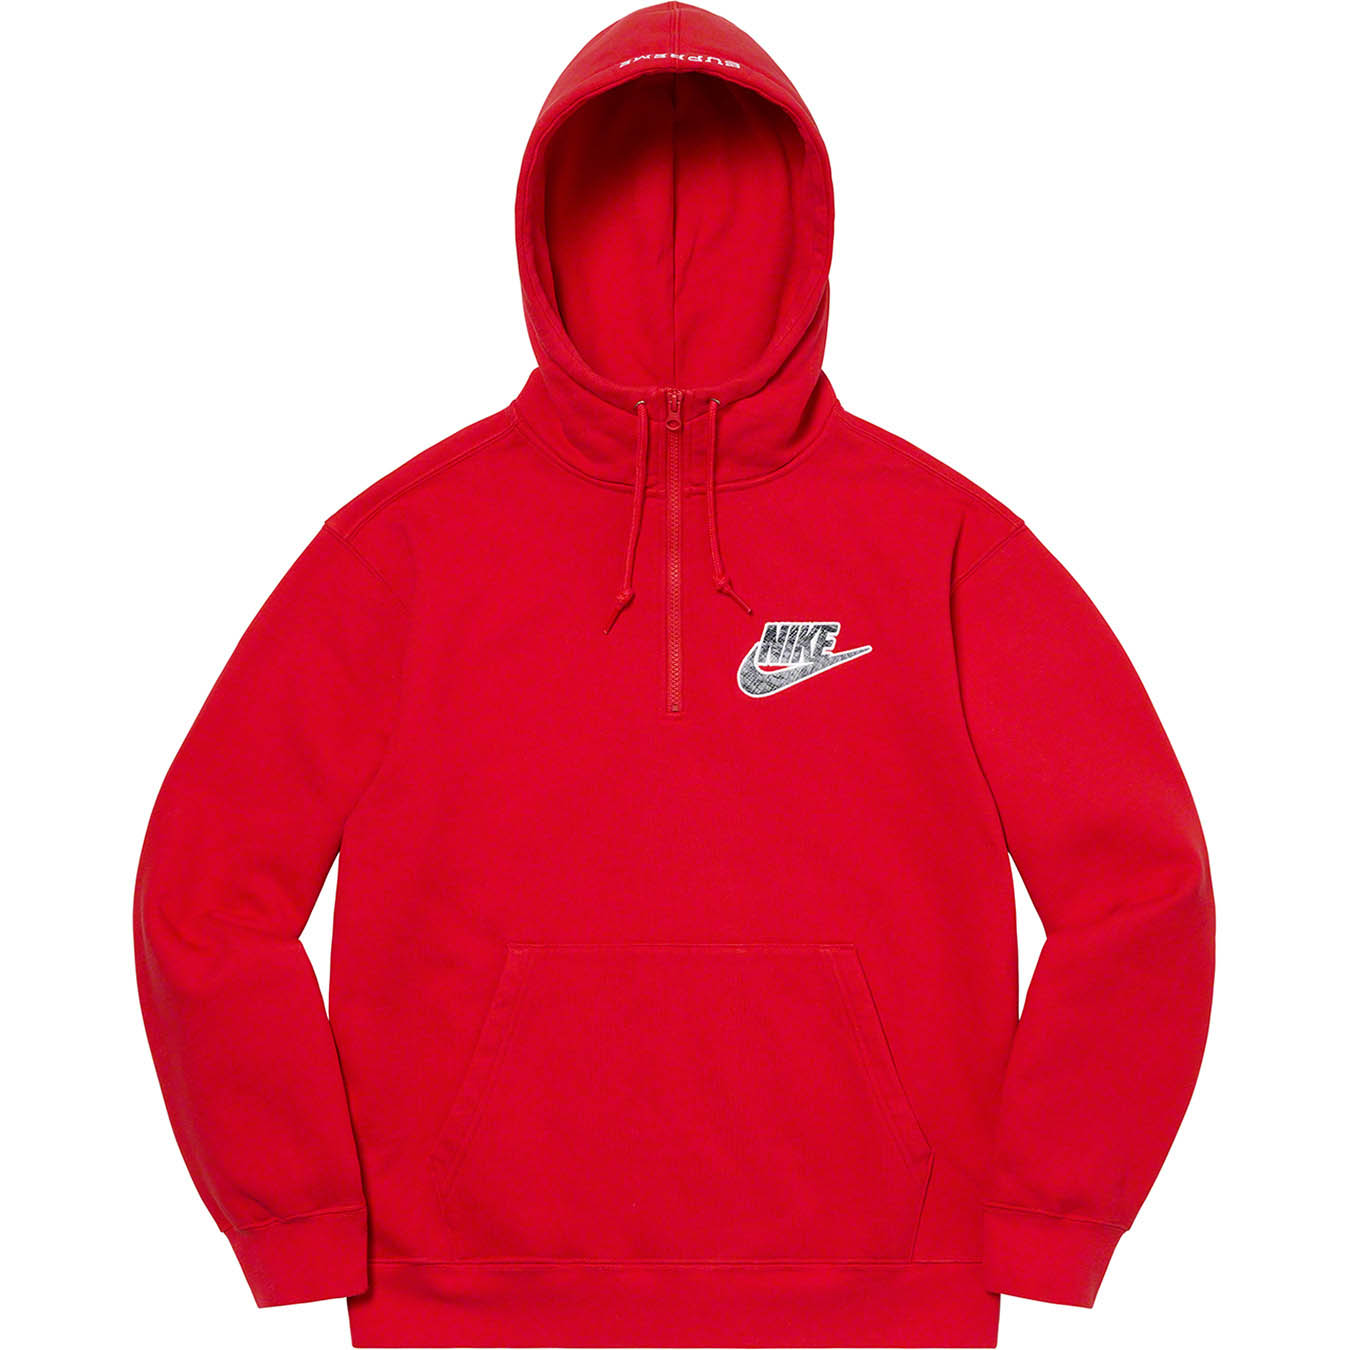 Supreme®/Nike® Half Zip Hooded Sweatshirt | Supreme 21ss